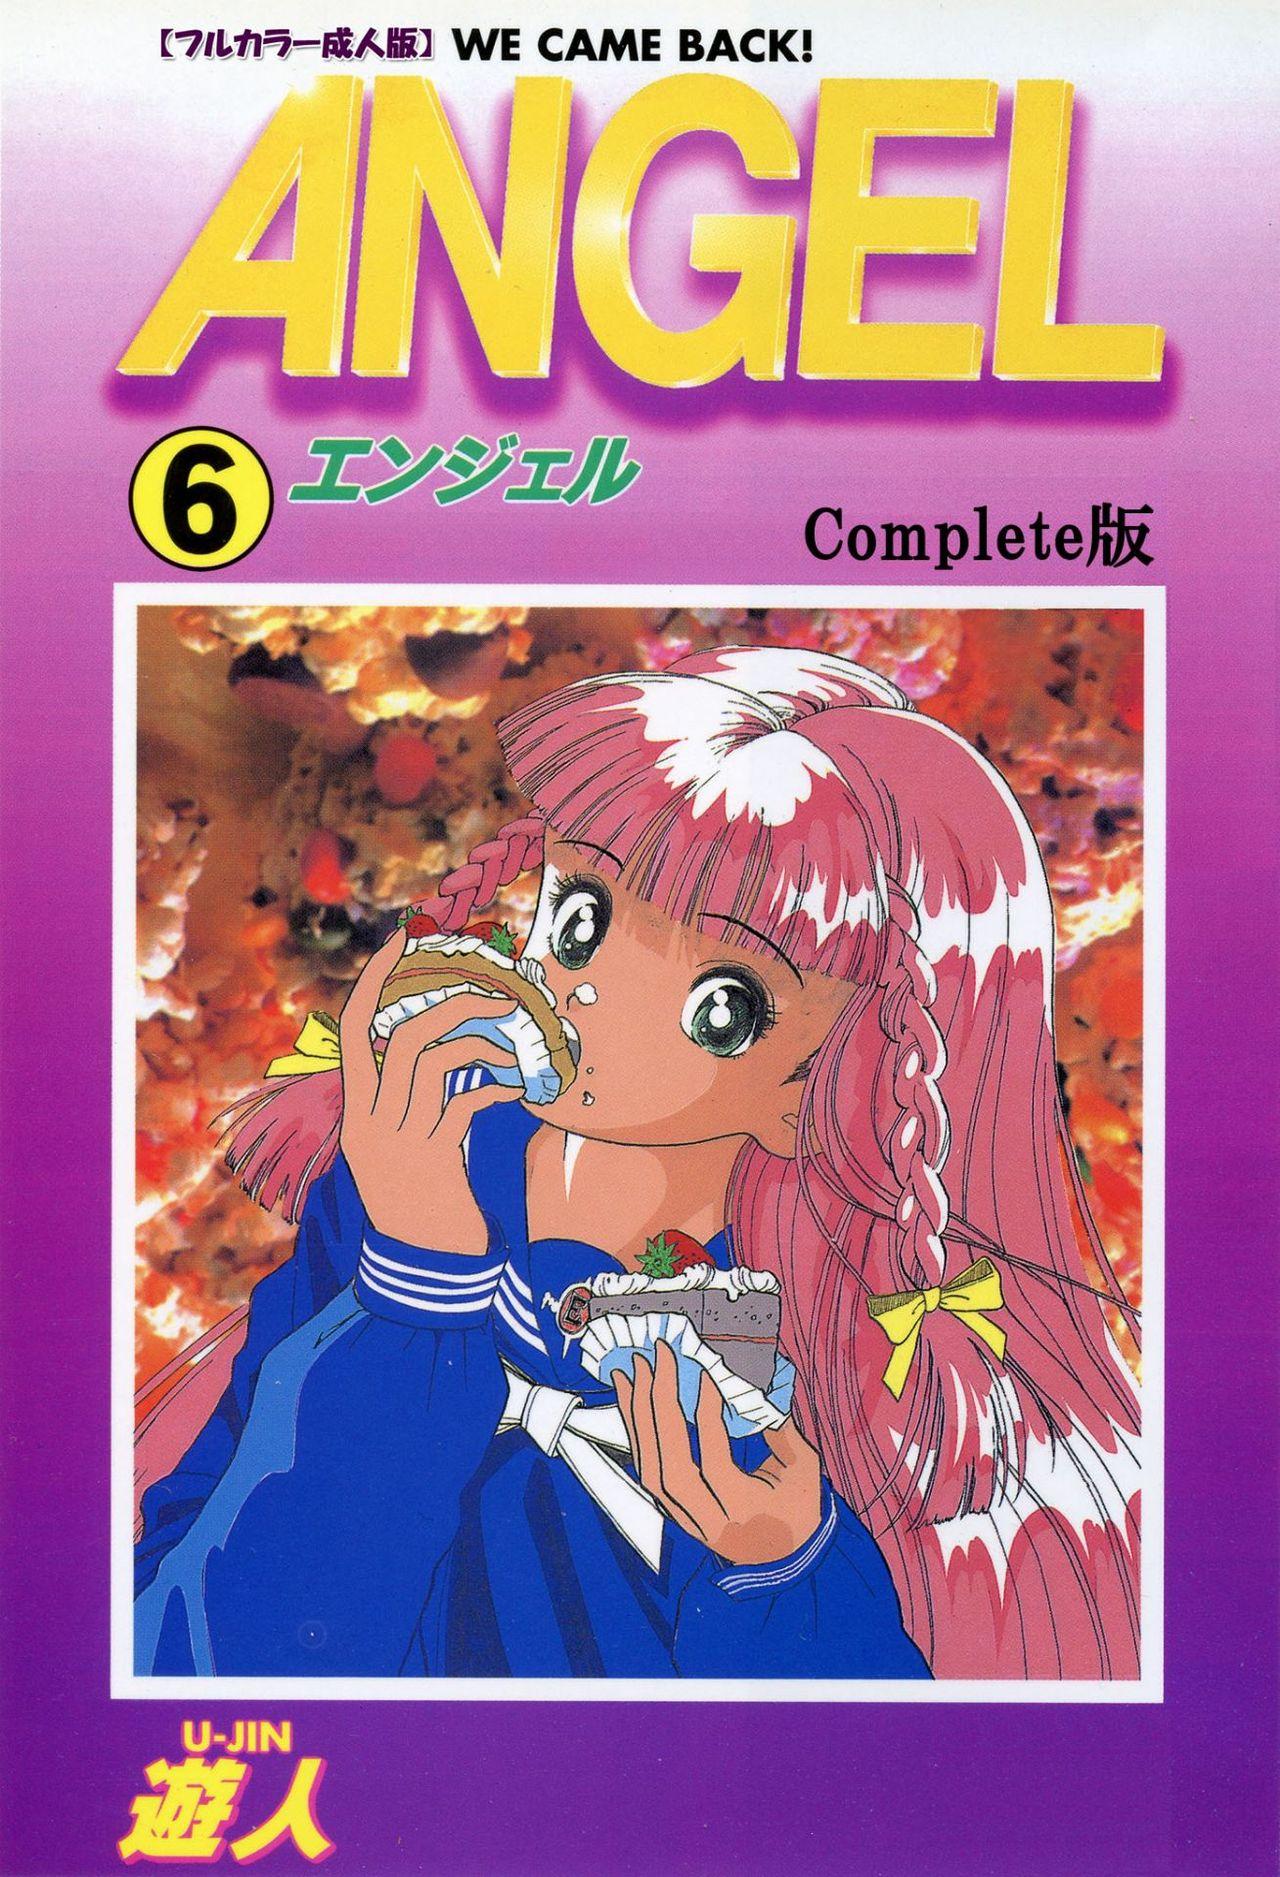 Milk ANGEL 6 Completeban Puto - Picture 1